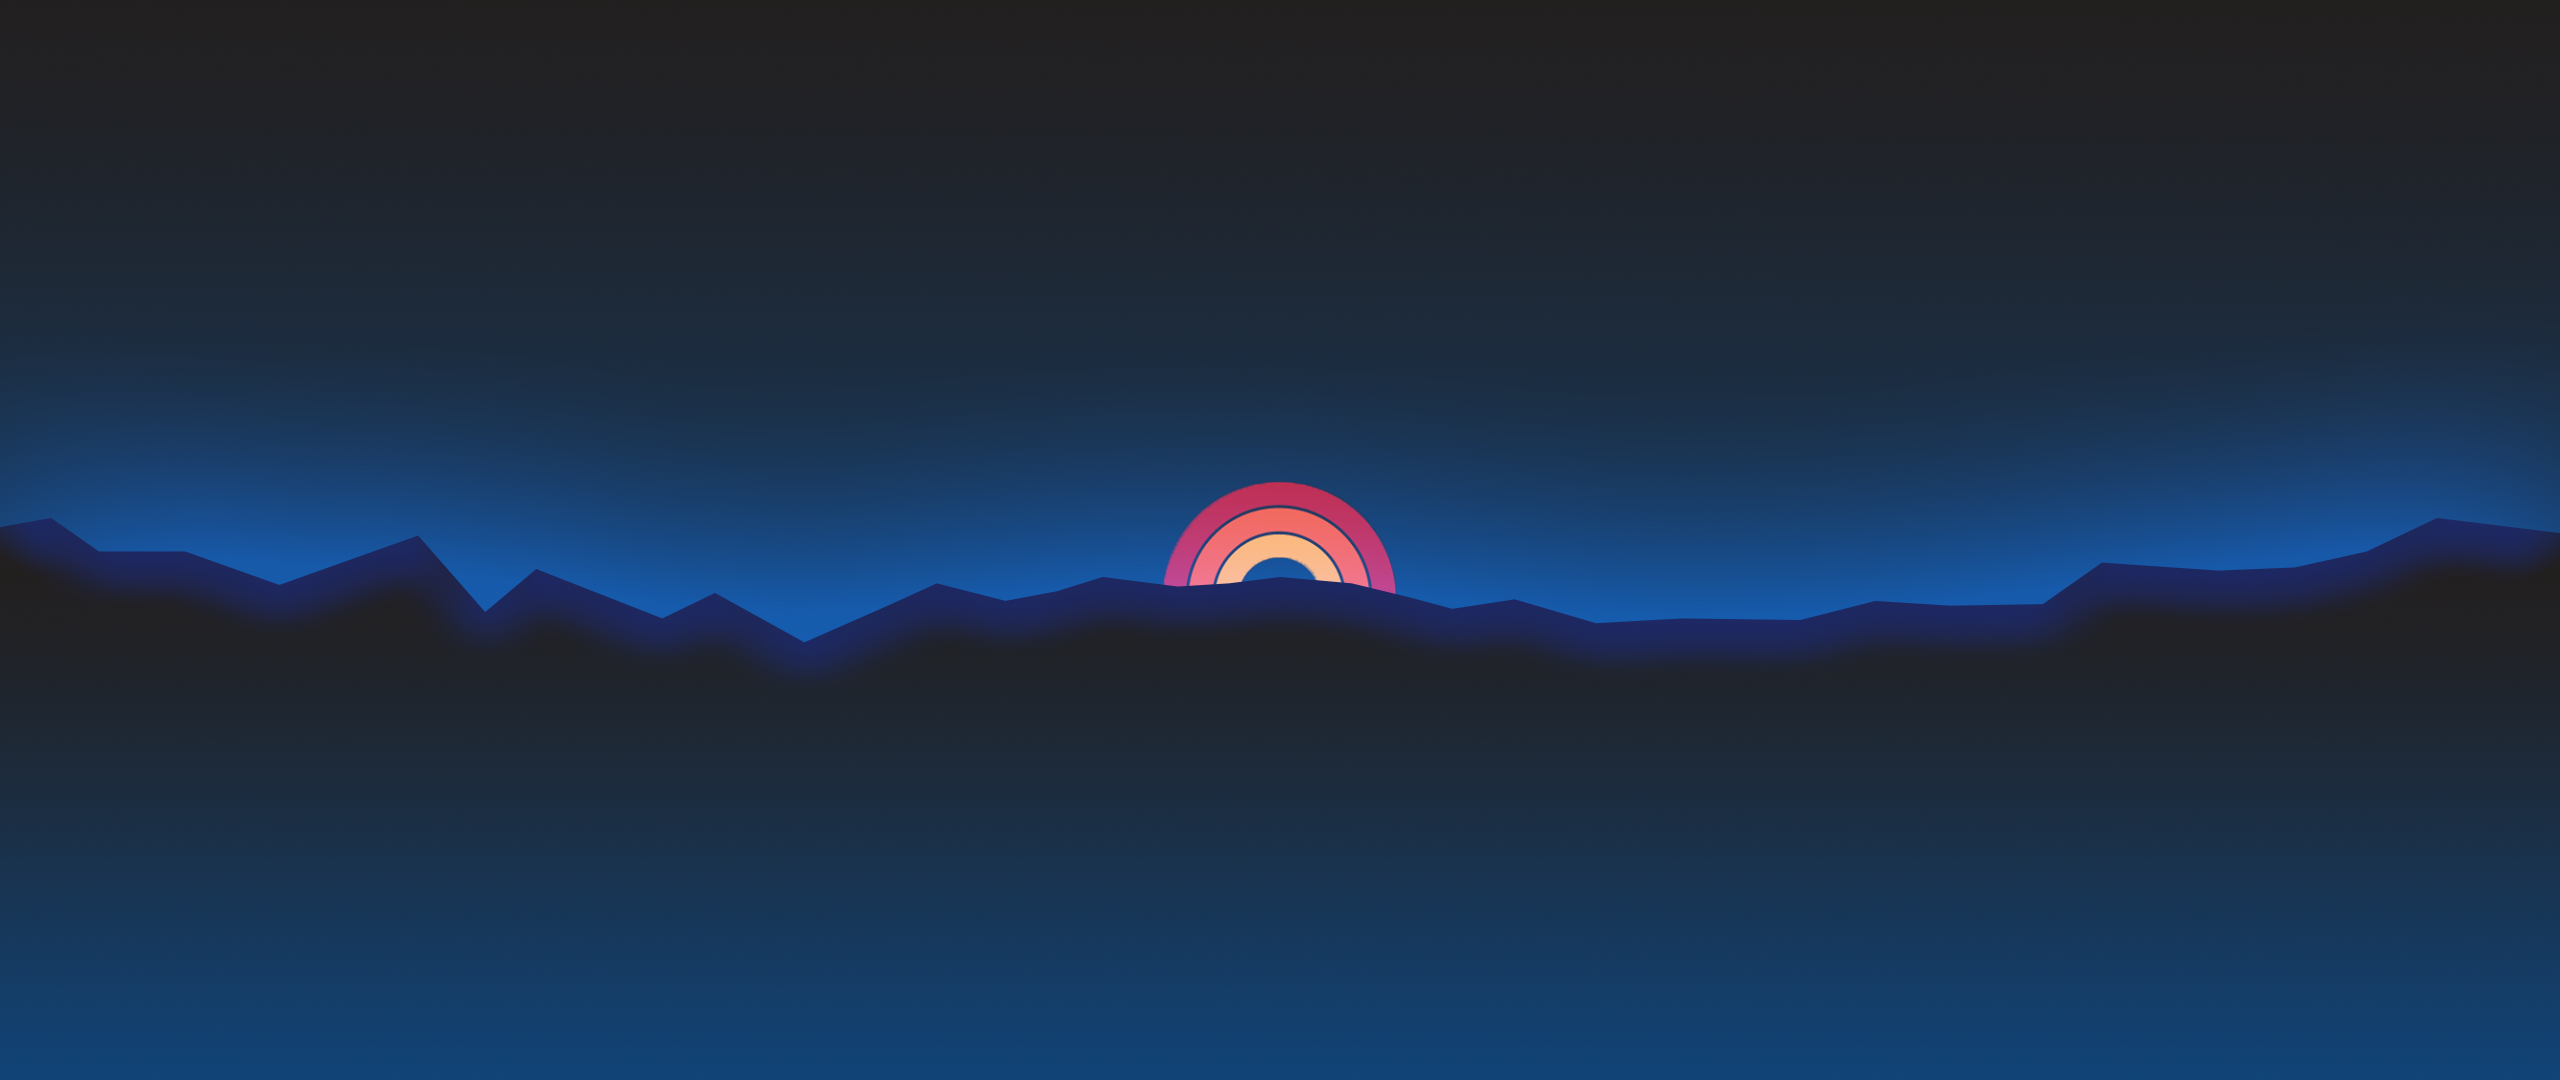 General 2560x1080 minimalism retro style neon sunset Com Truise mountains landscape ultrawide